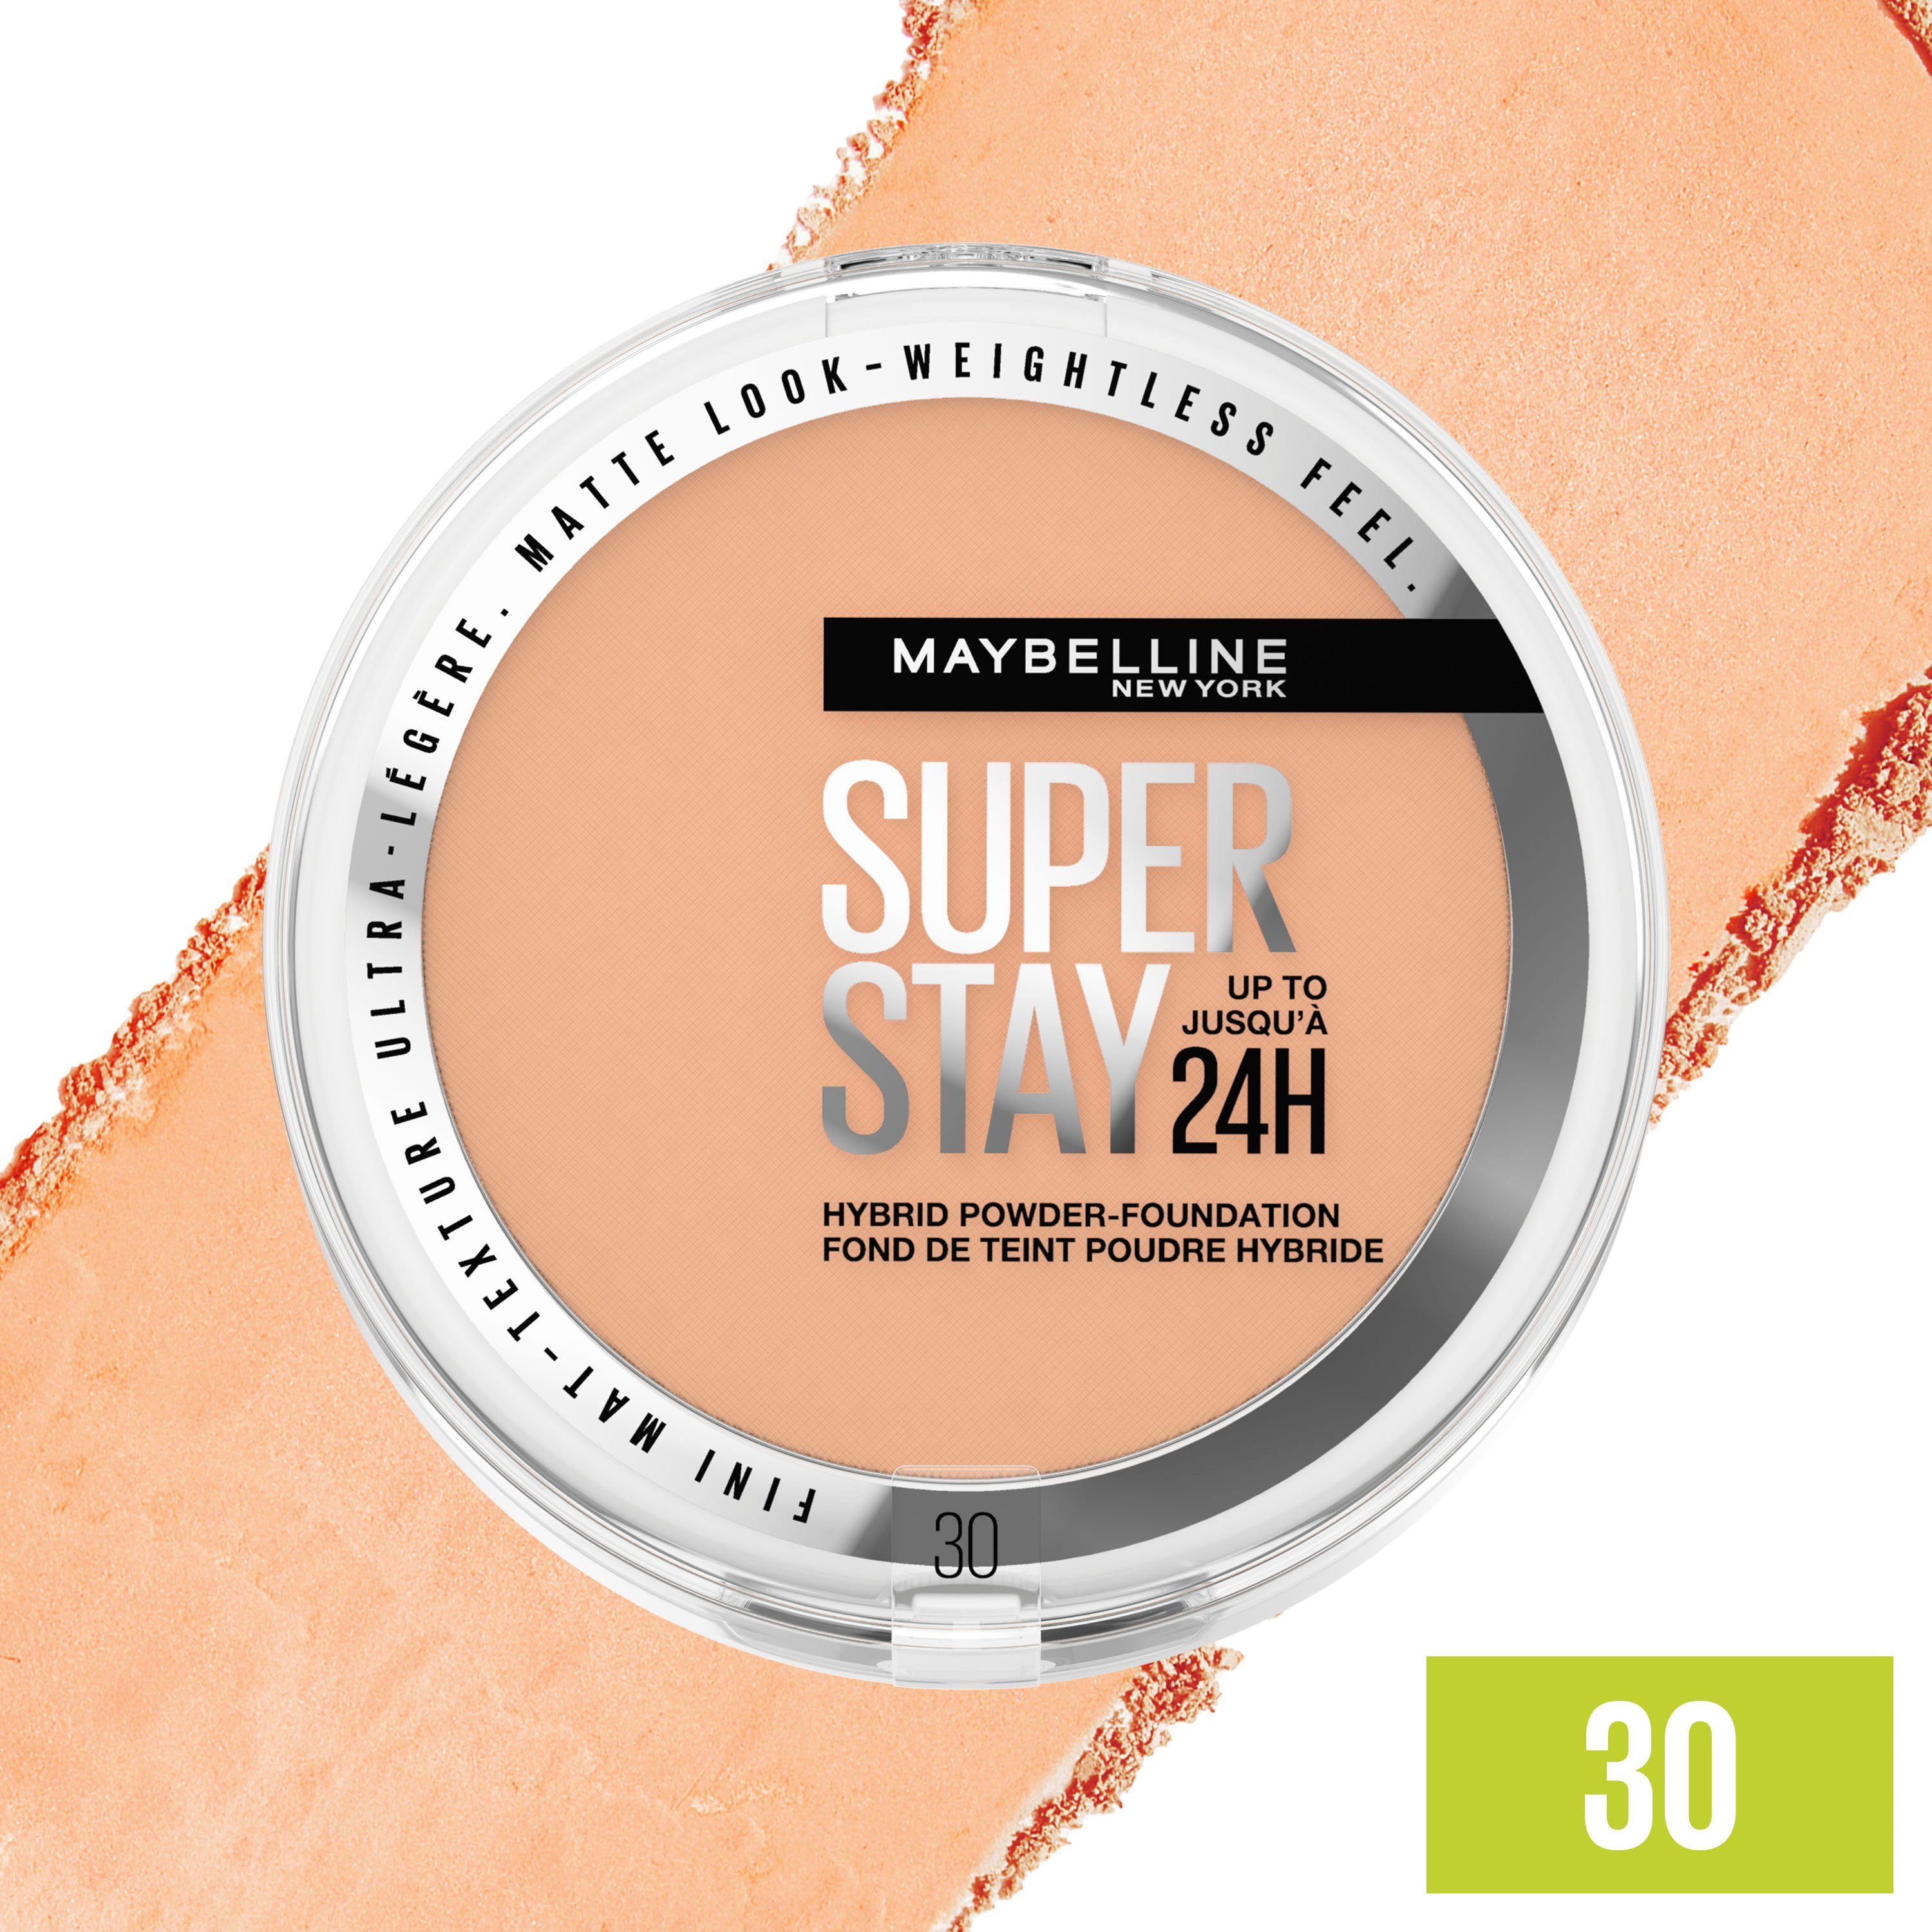 Hybrides Maybelline New NEW Foundation Stay MAYBELLINE York Make-Up YORK Super Puder